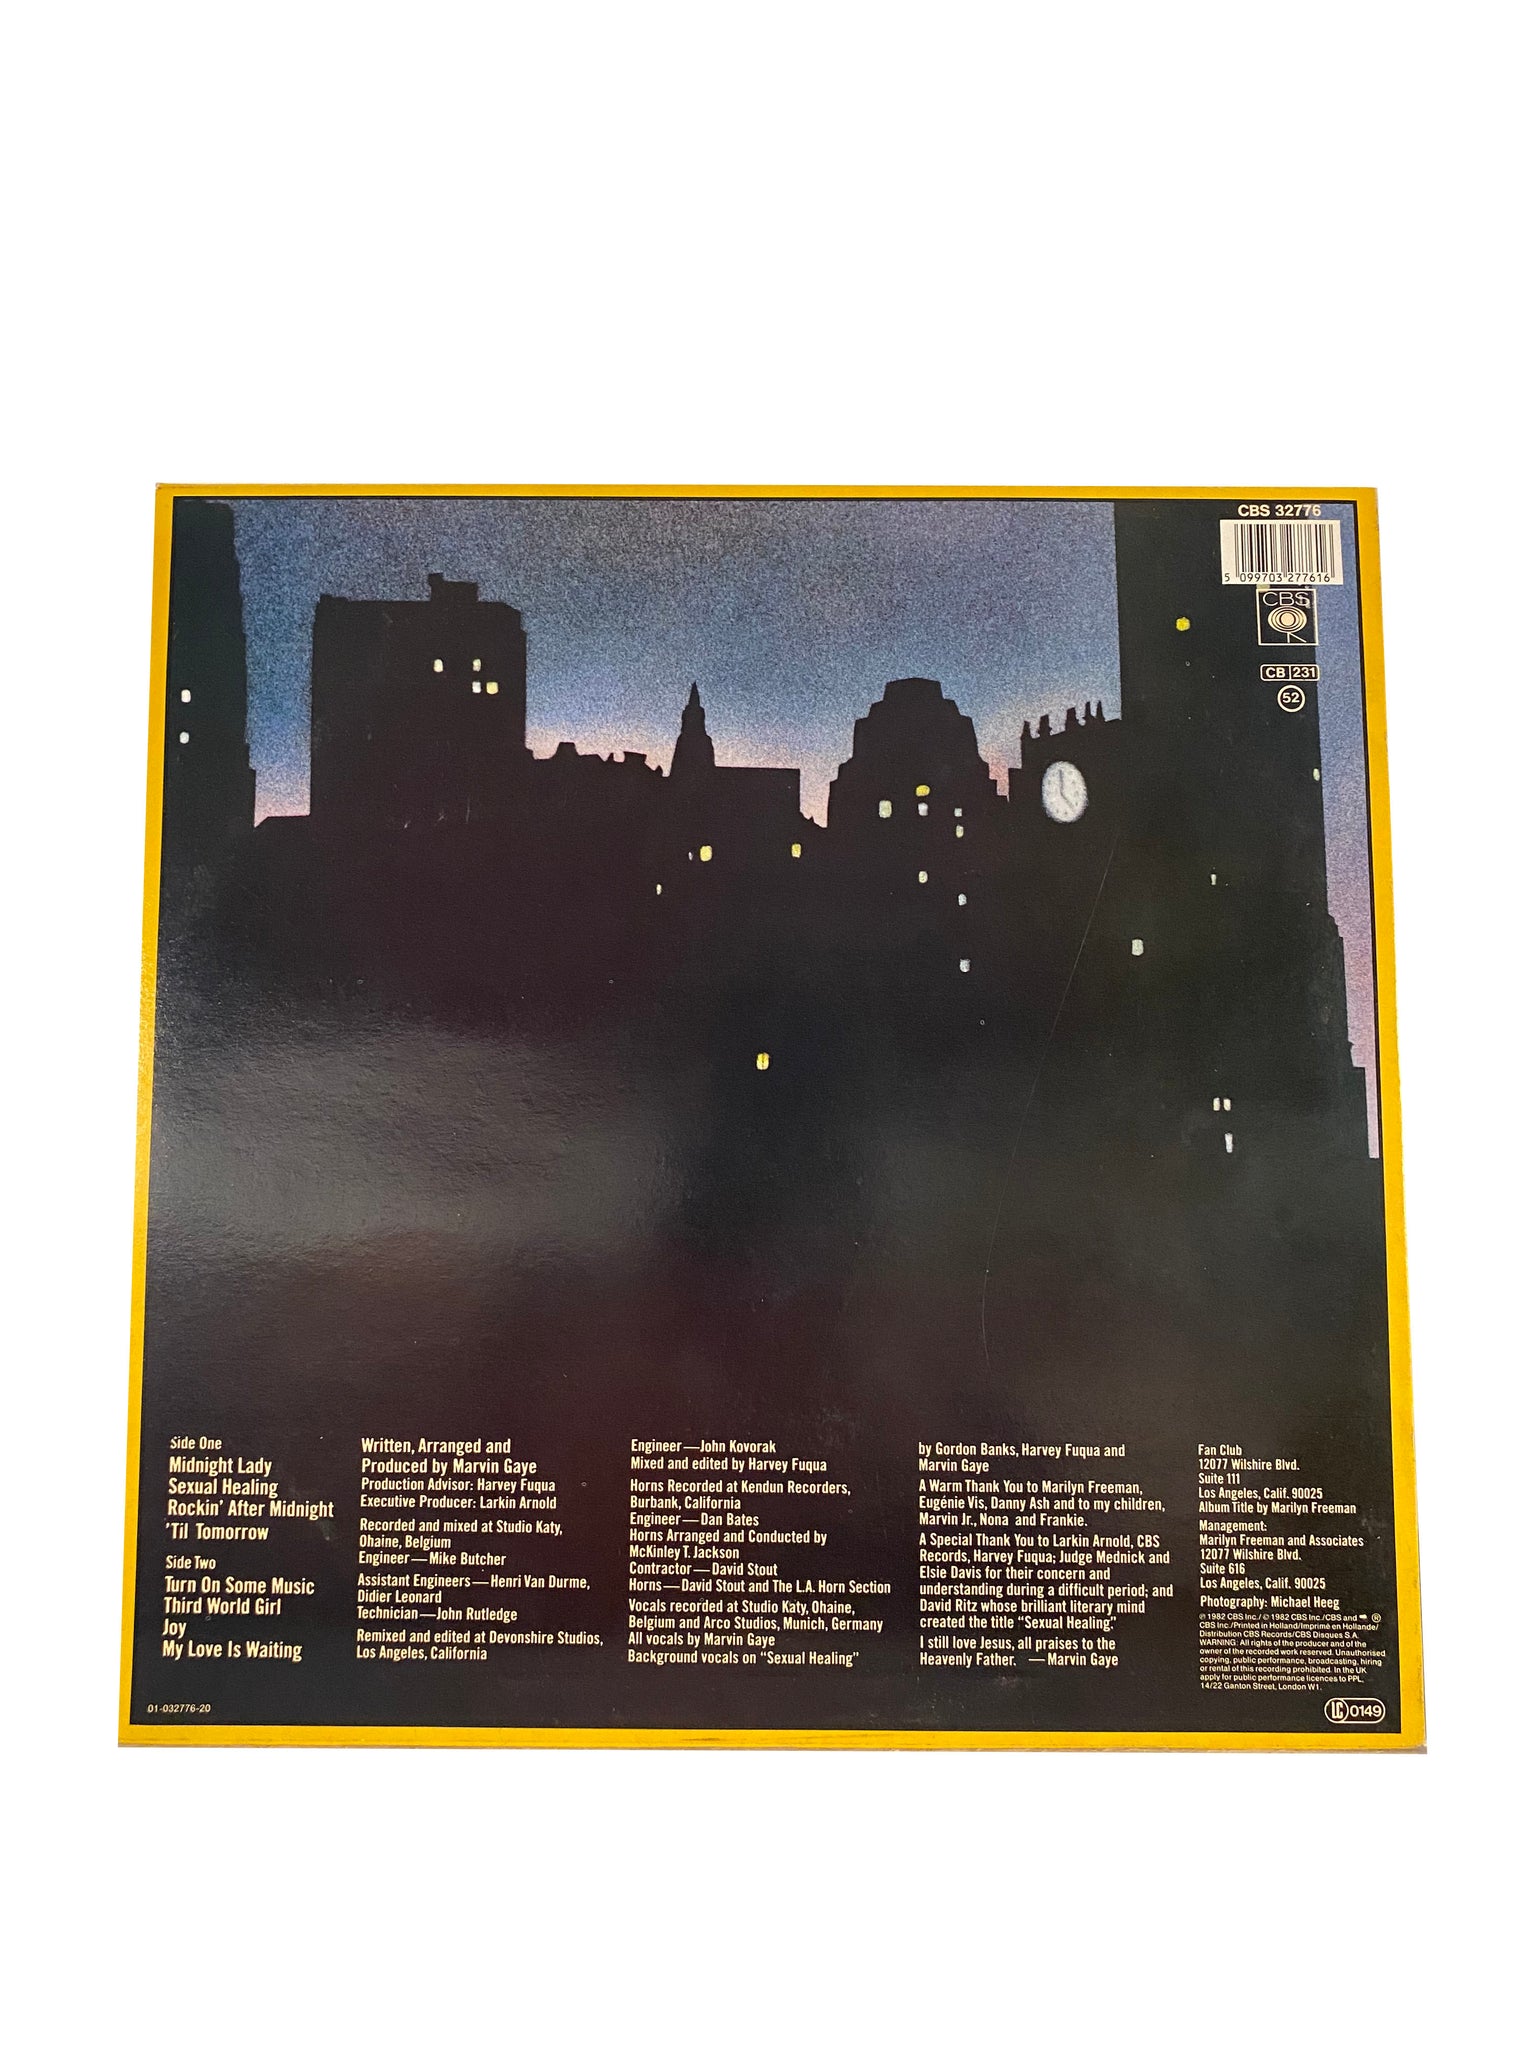 Midnight Love (LP; AlBUM; RE), by Marvin Gaye